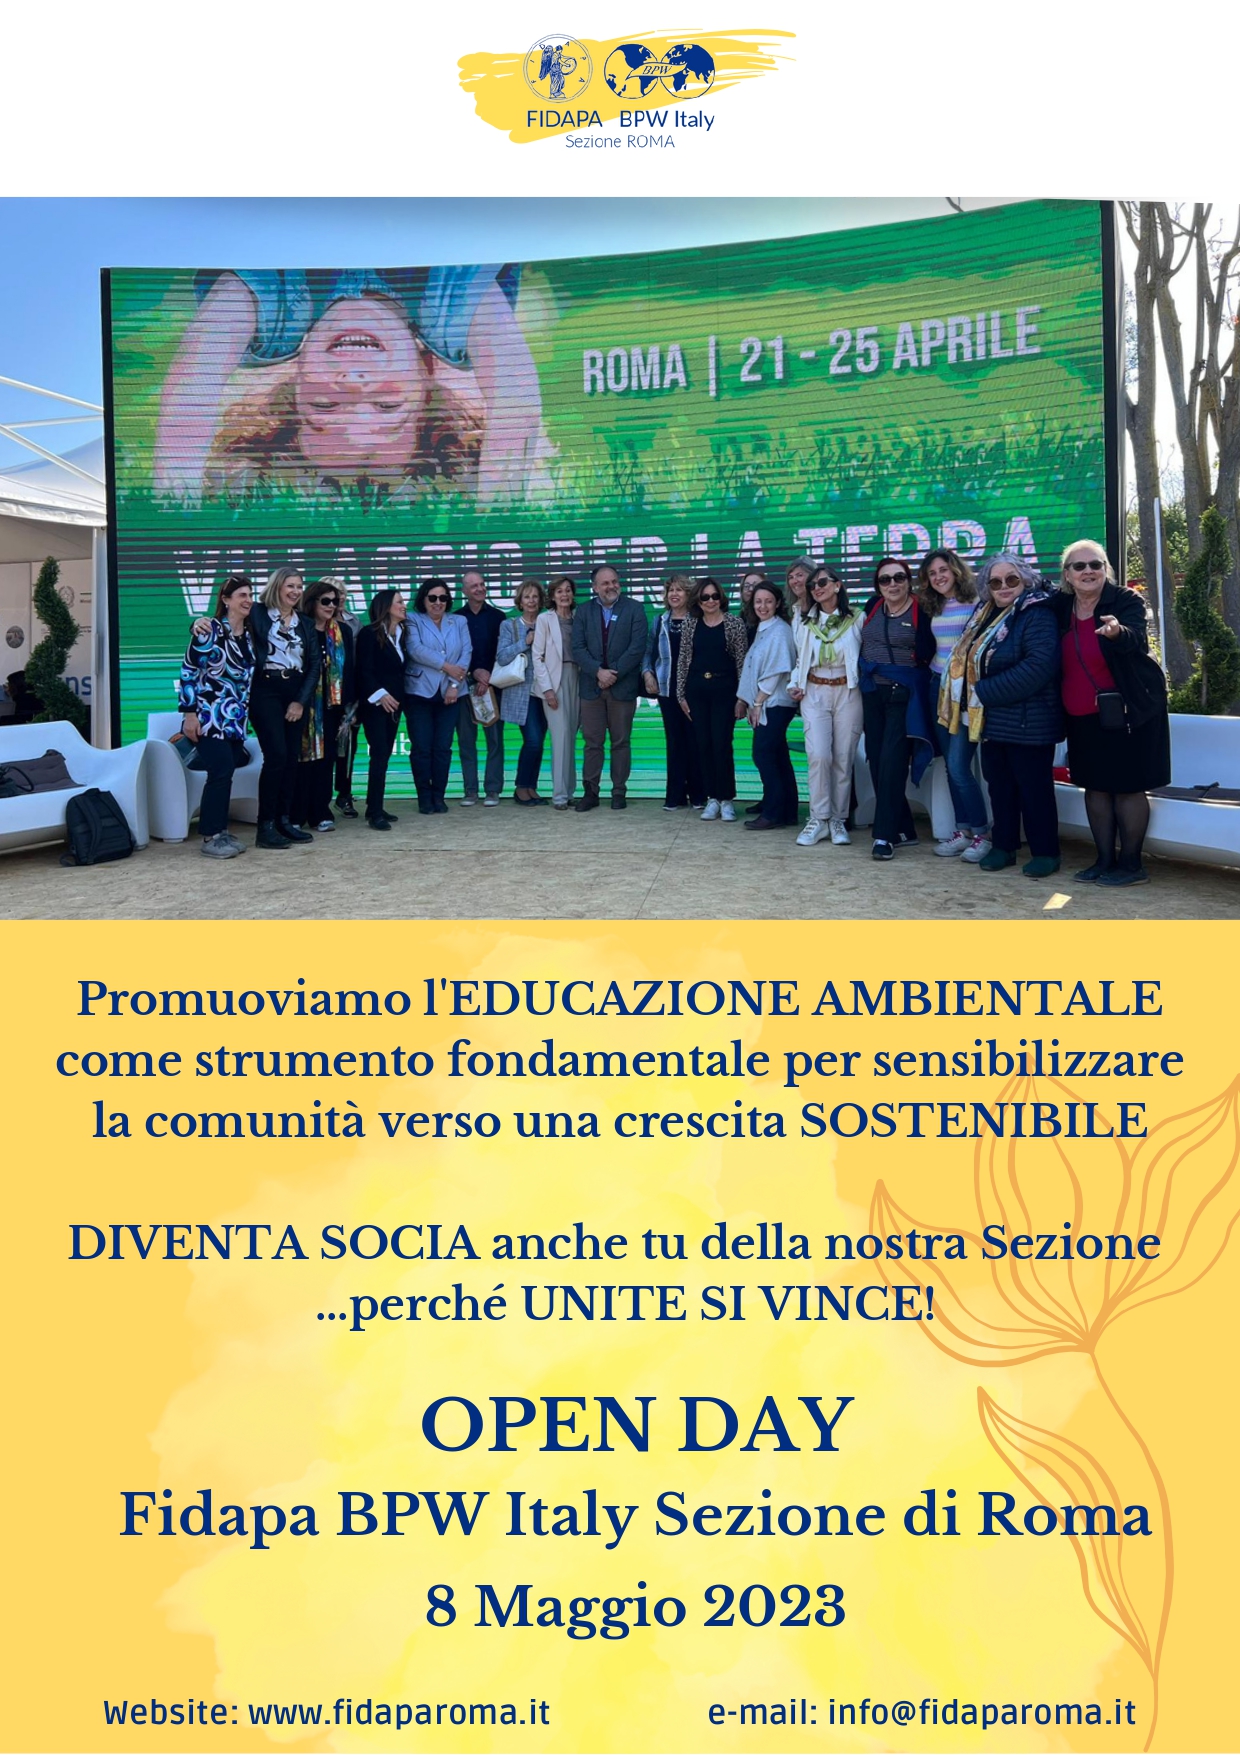 Open Day Fidapa BPW Italy